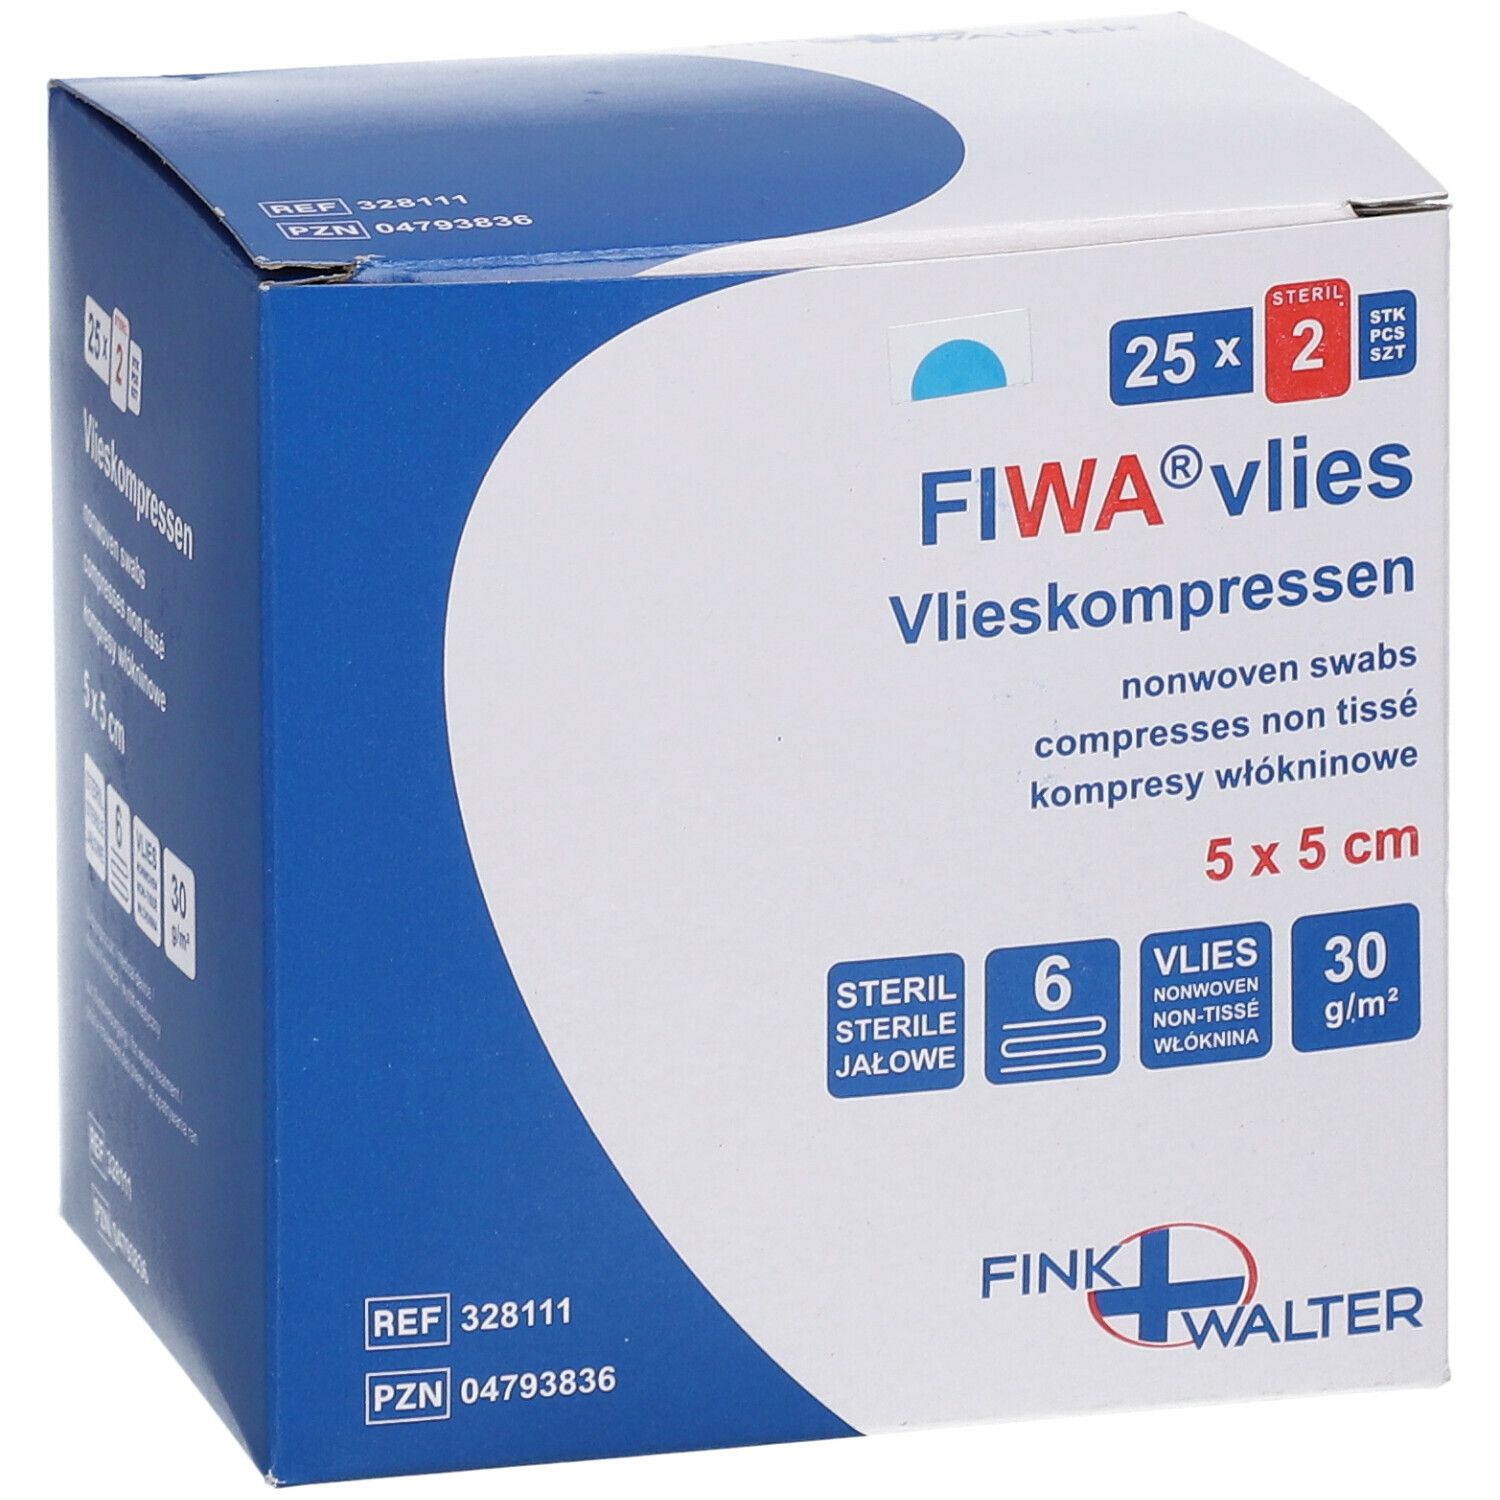 FIWA® Vlieskompressen 5x5 cm steril